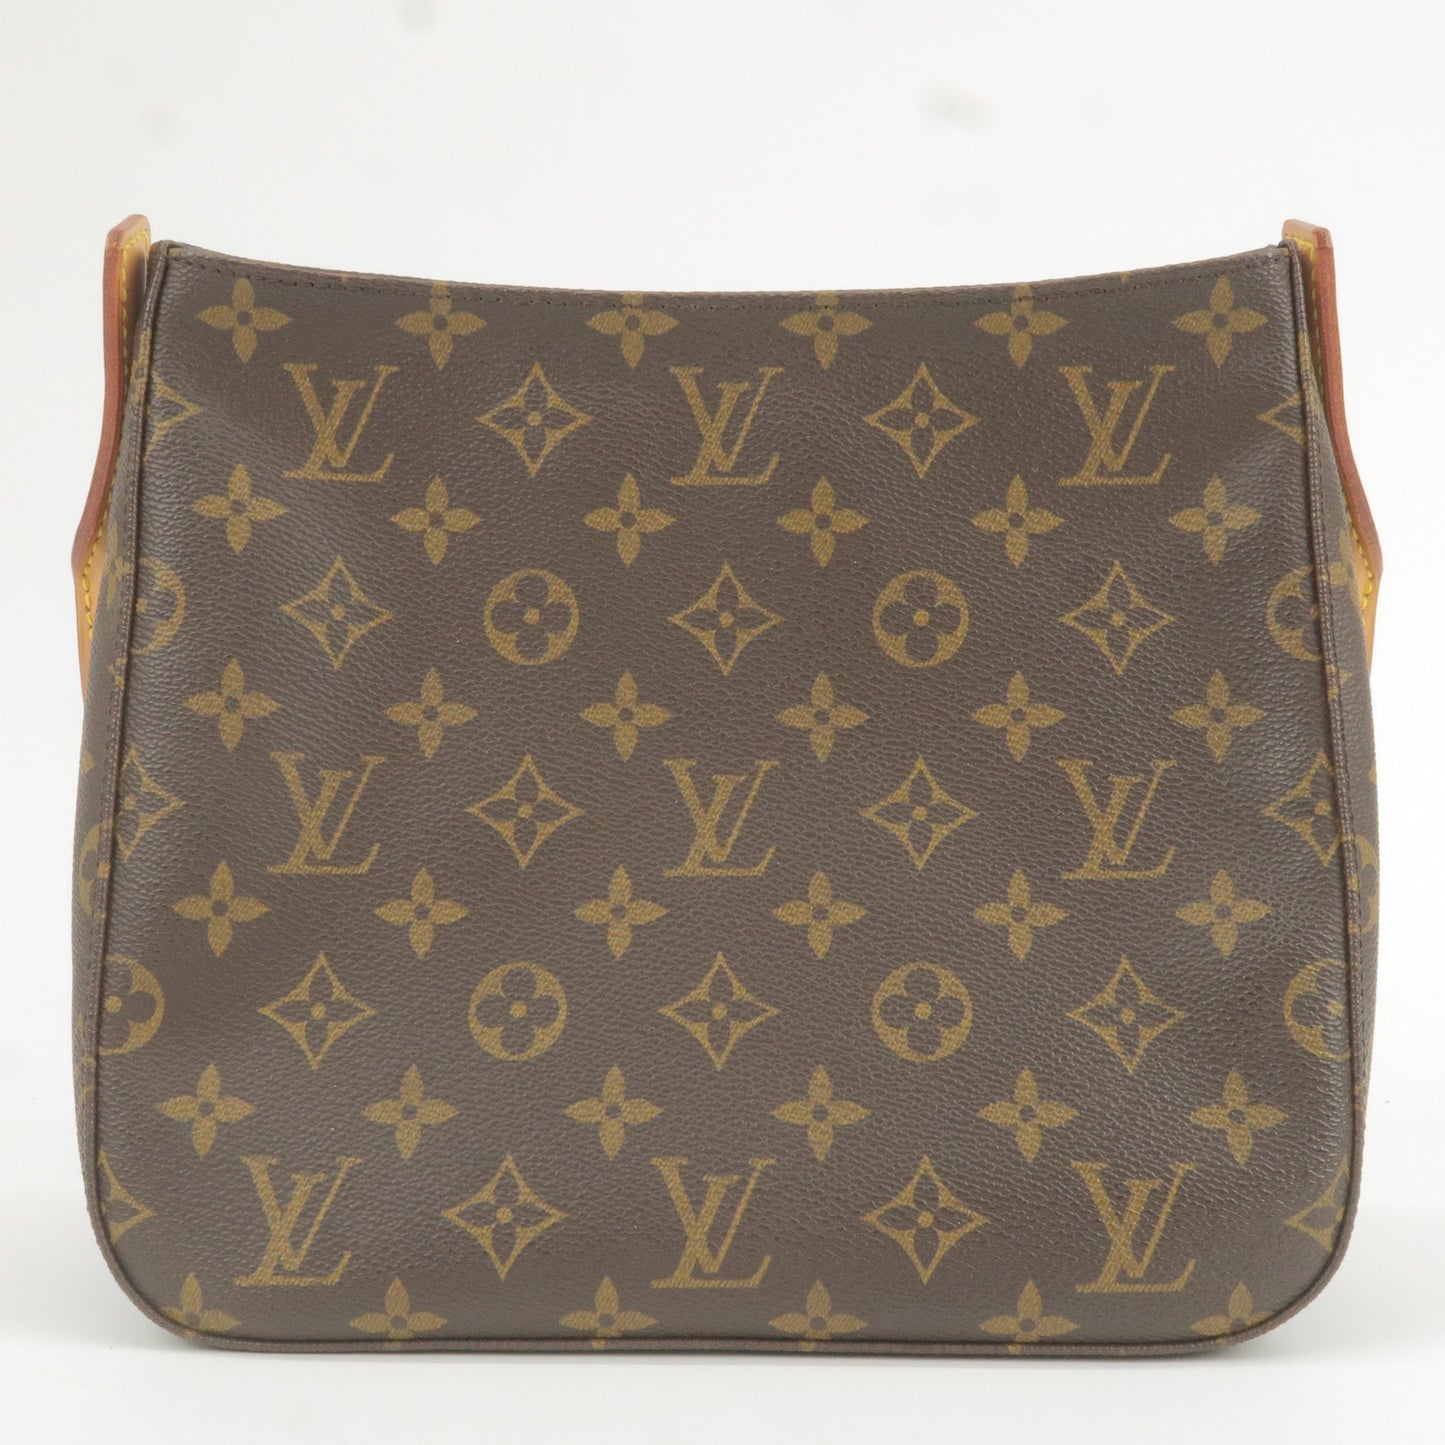 Louis Vuitton Looping MM Bag Review 